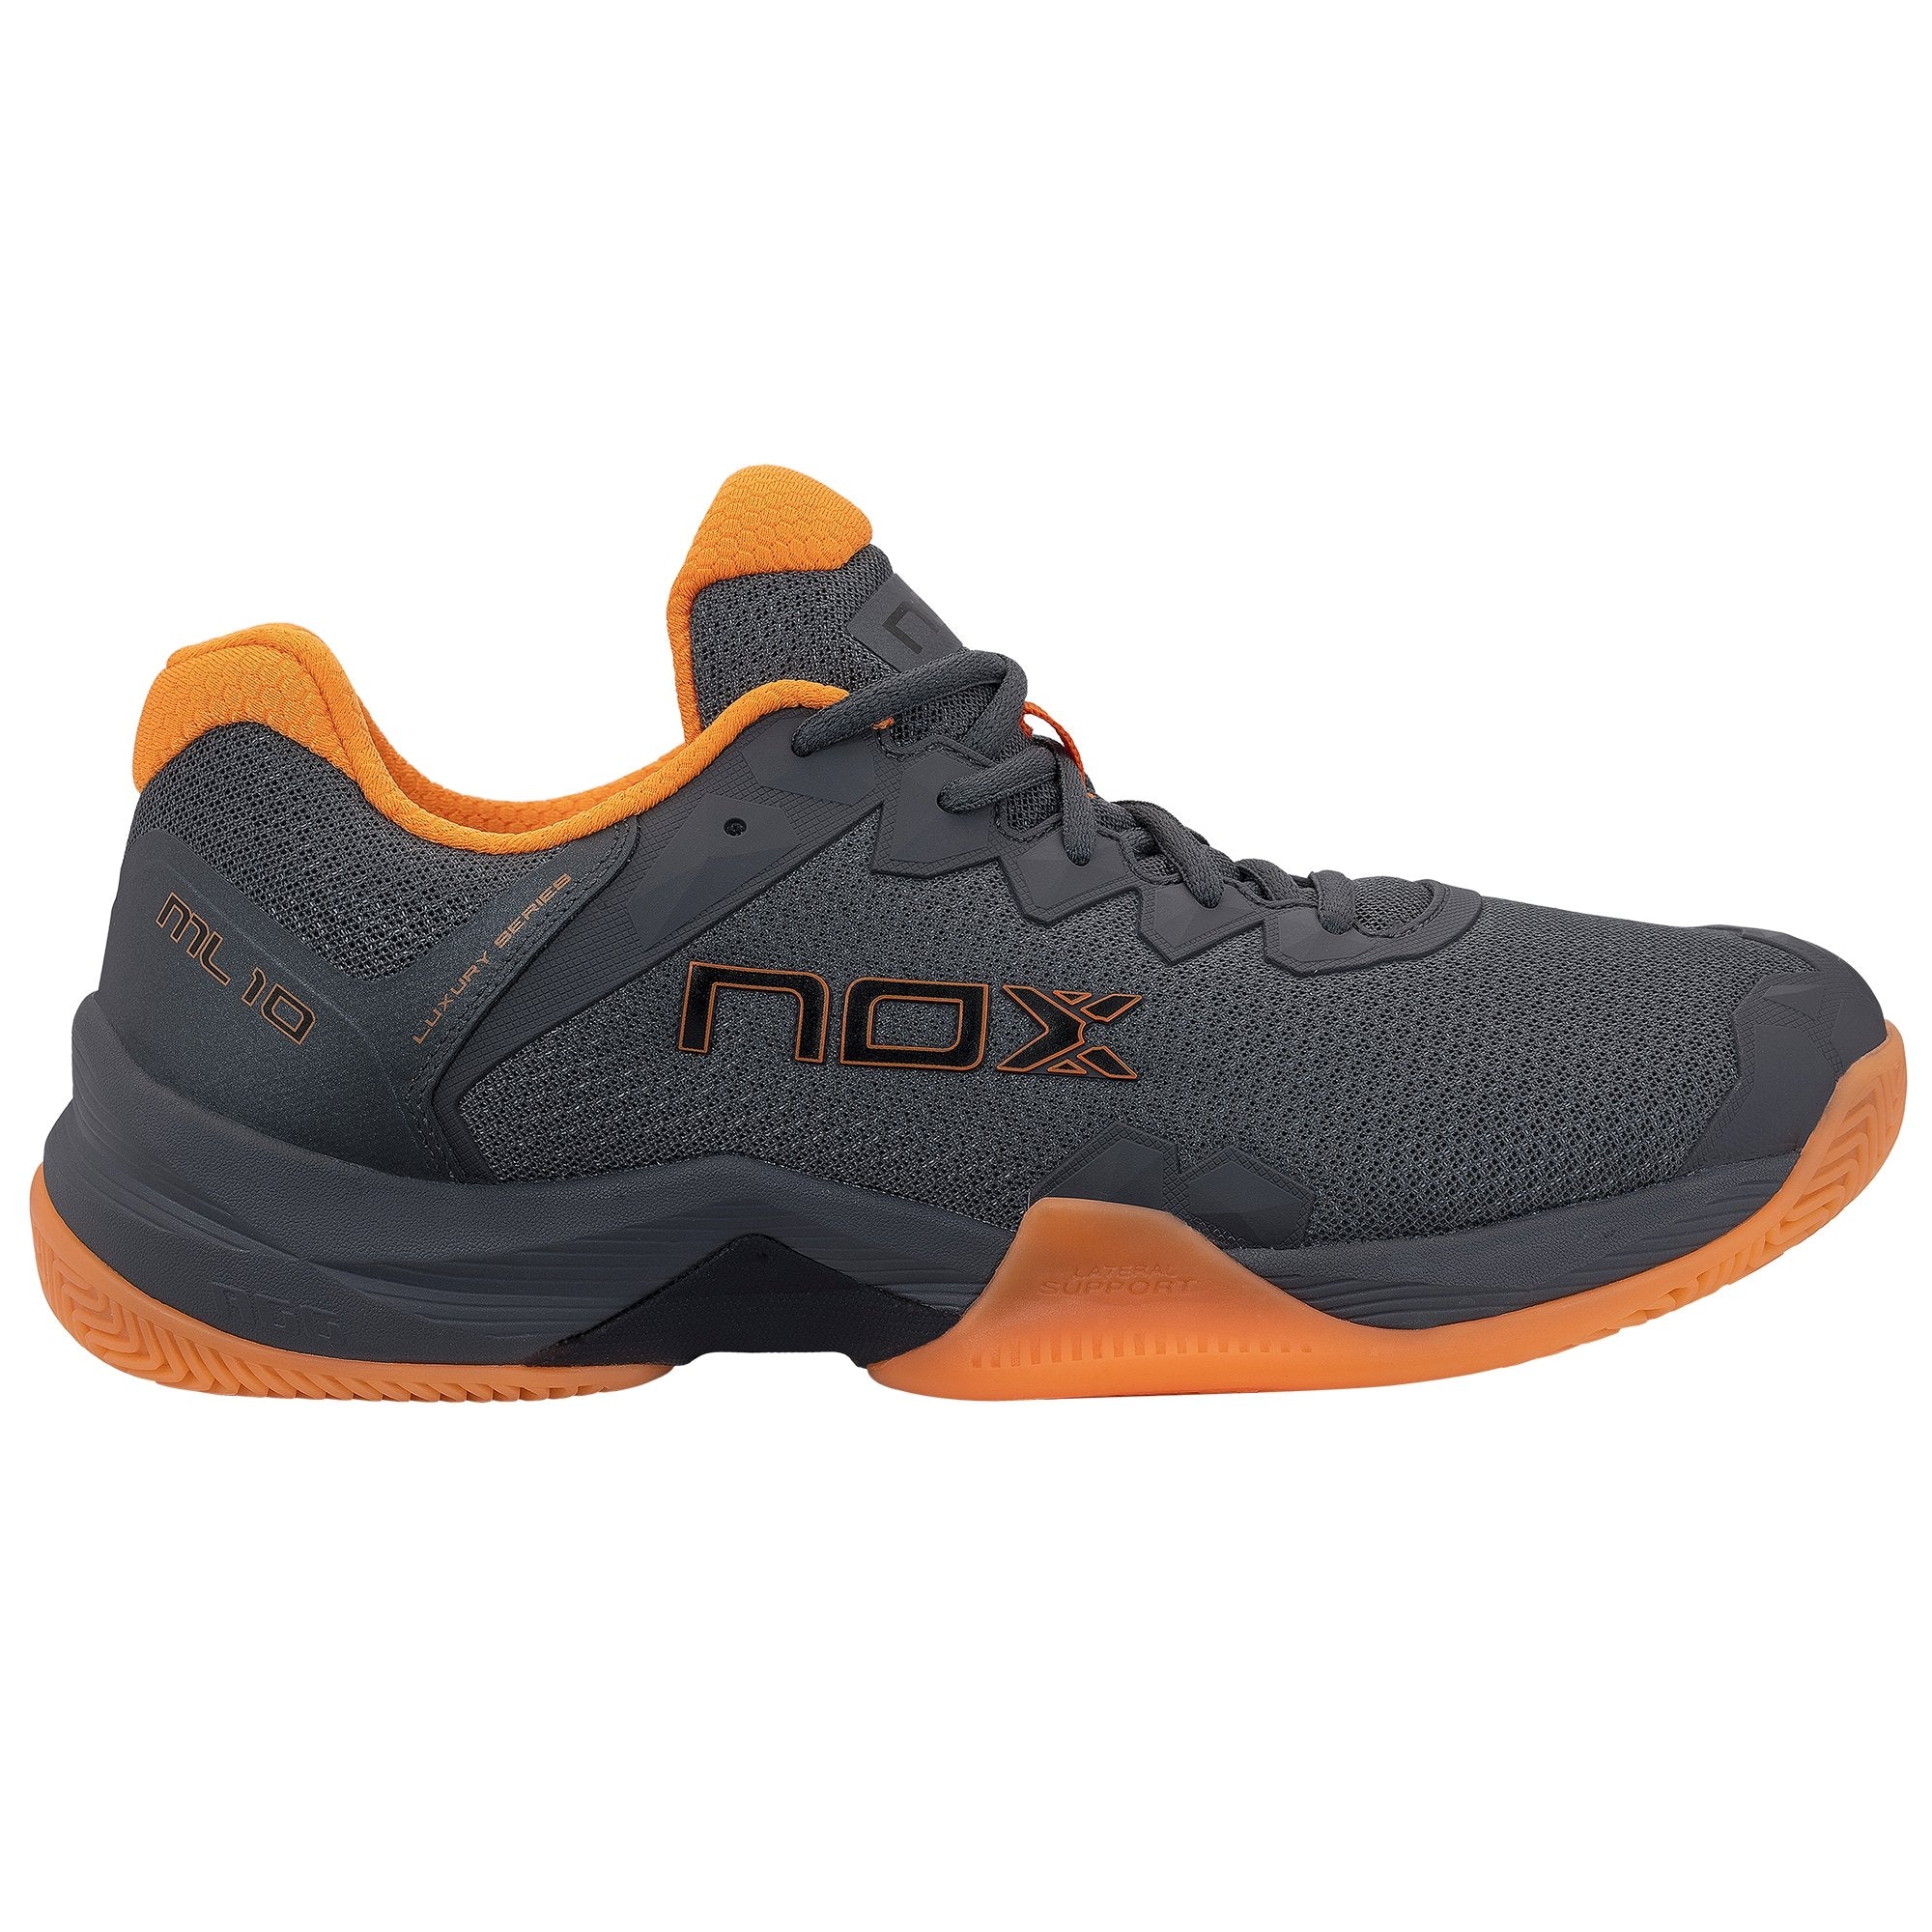 Nox Ml10 Hexa Calmlhexoran Cinzento - gris-naranja - 